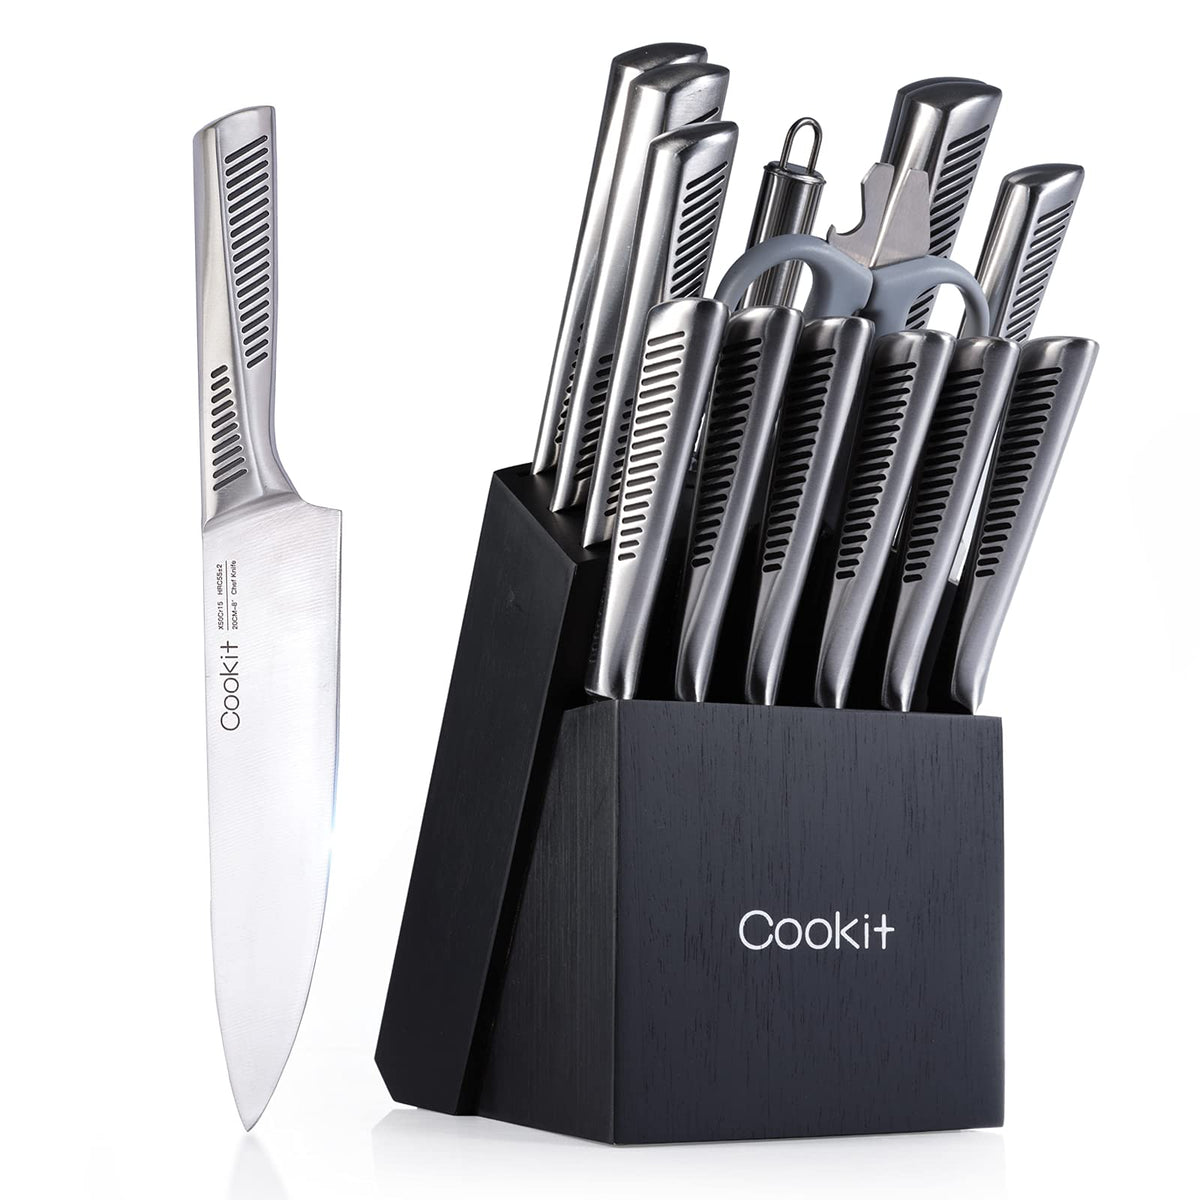 ProSlice 15-Piece Precision Cutlery Set: German Steel Blades with SecureGrip Handles